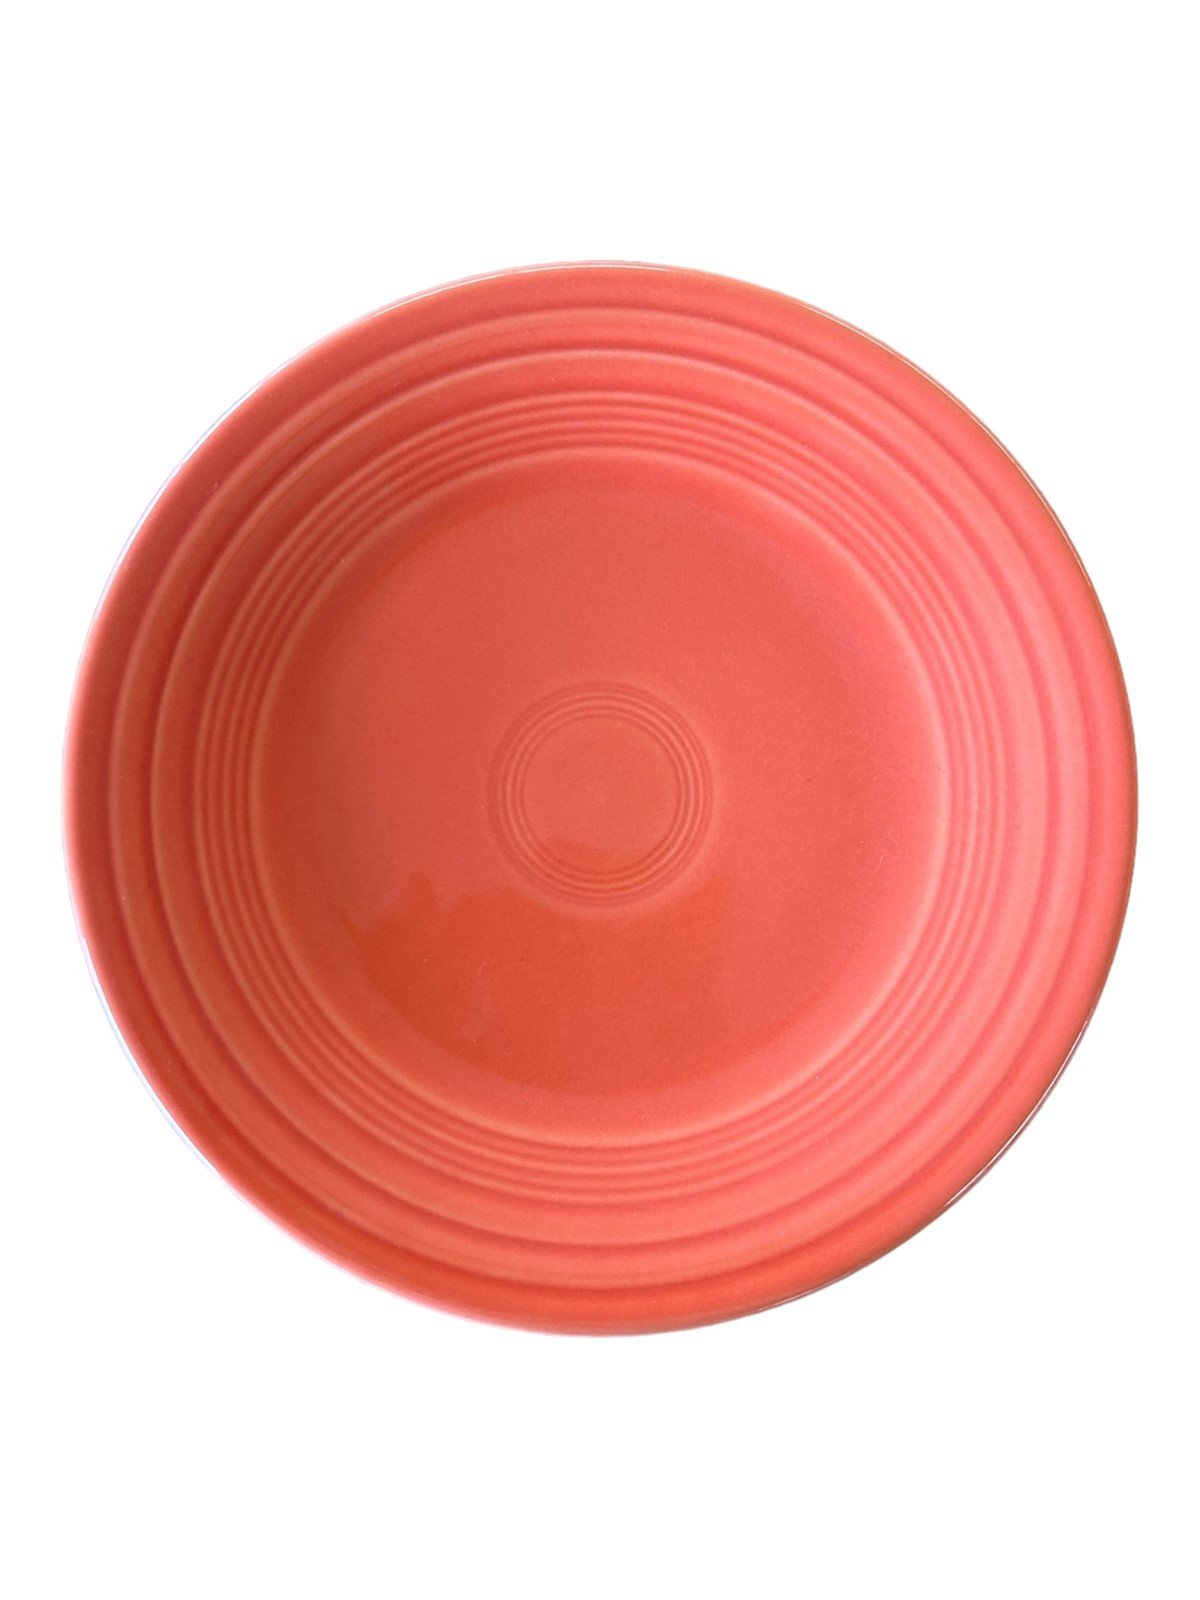 Fiesta - Persimmon Orange Luncheon Plate Dish Ceramic Dining Homer Laughlin HLC